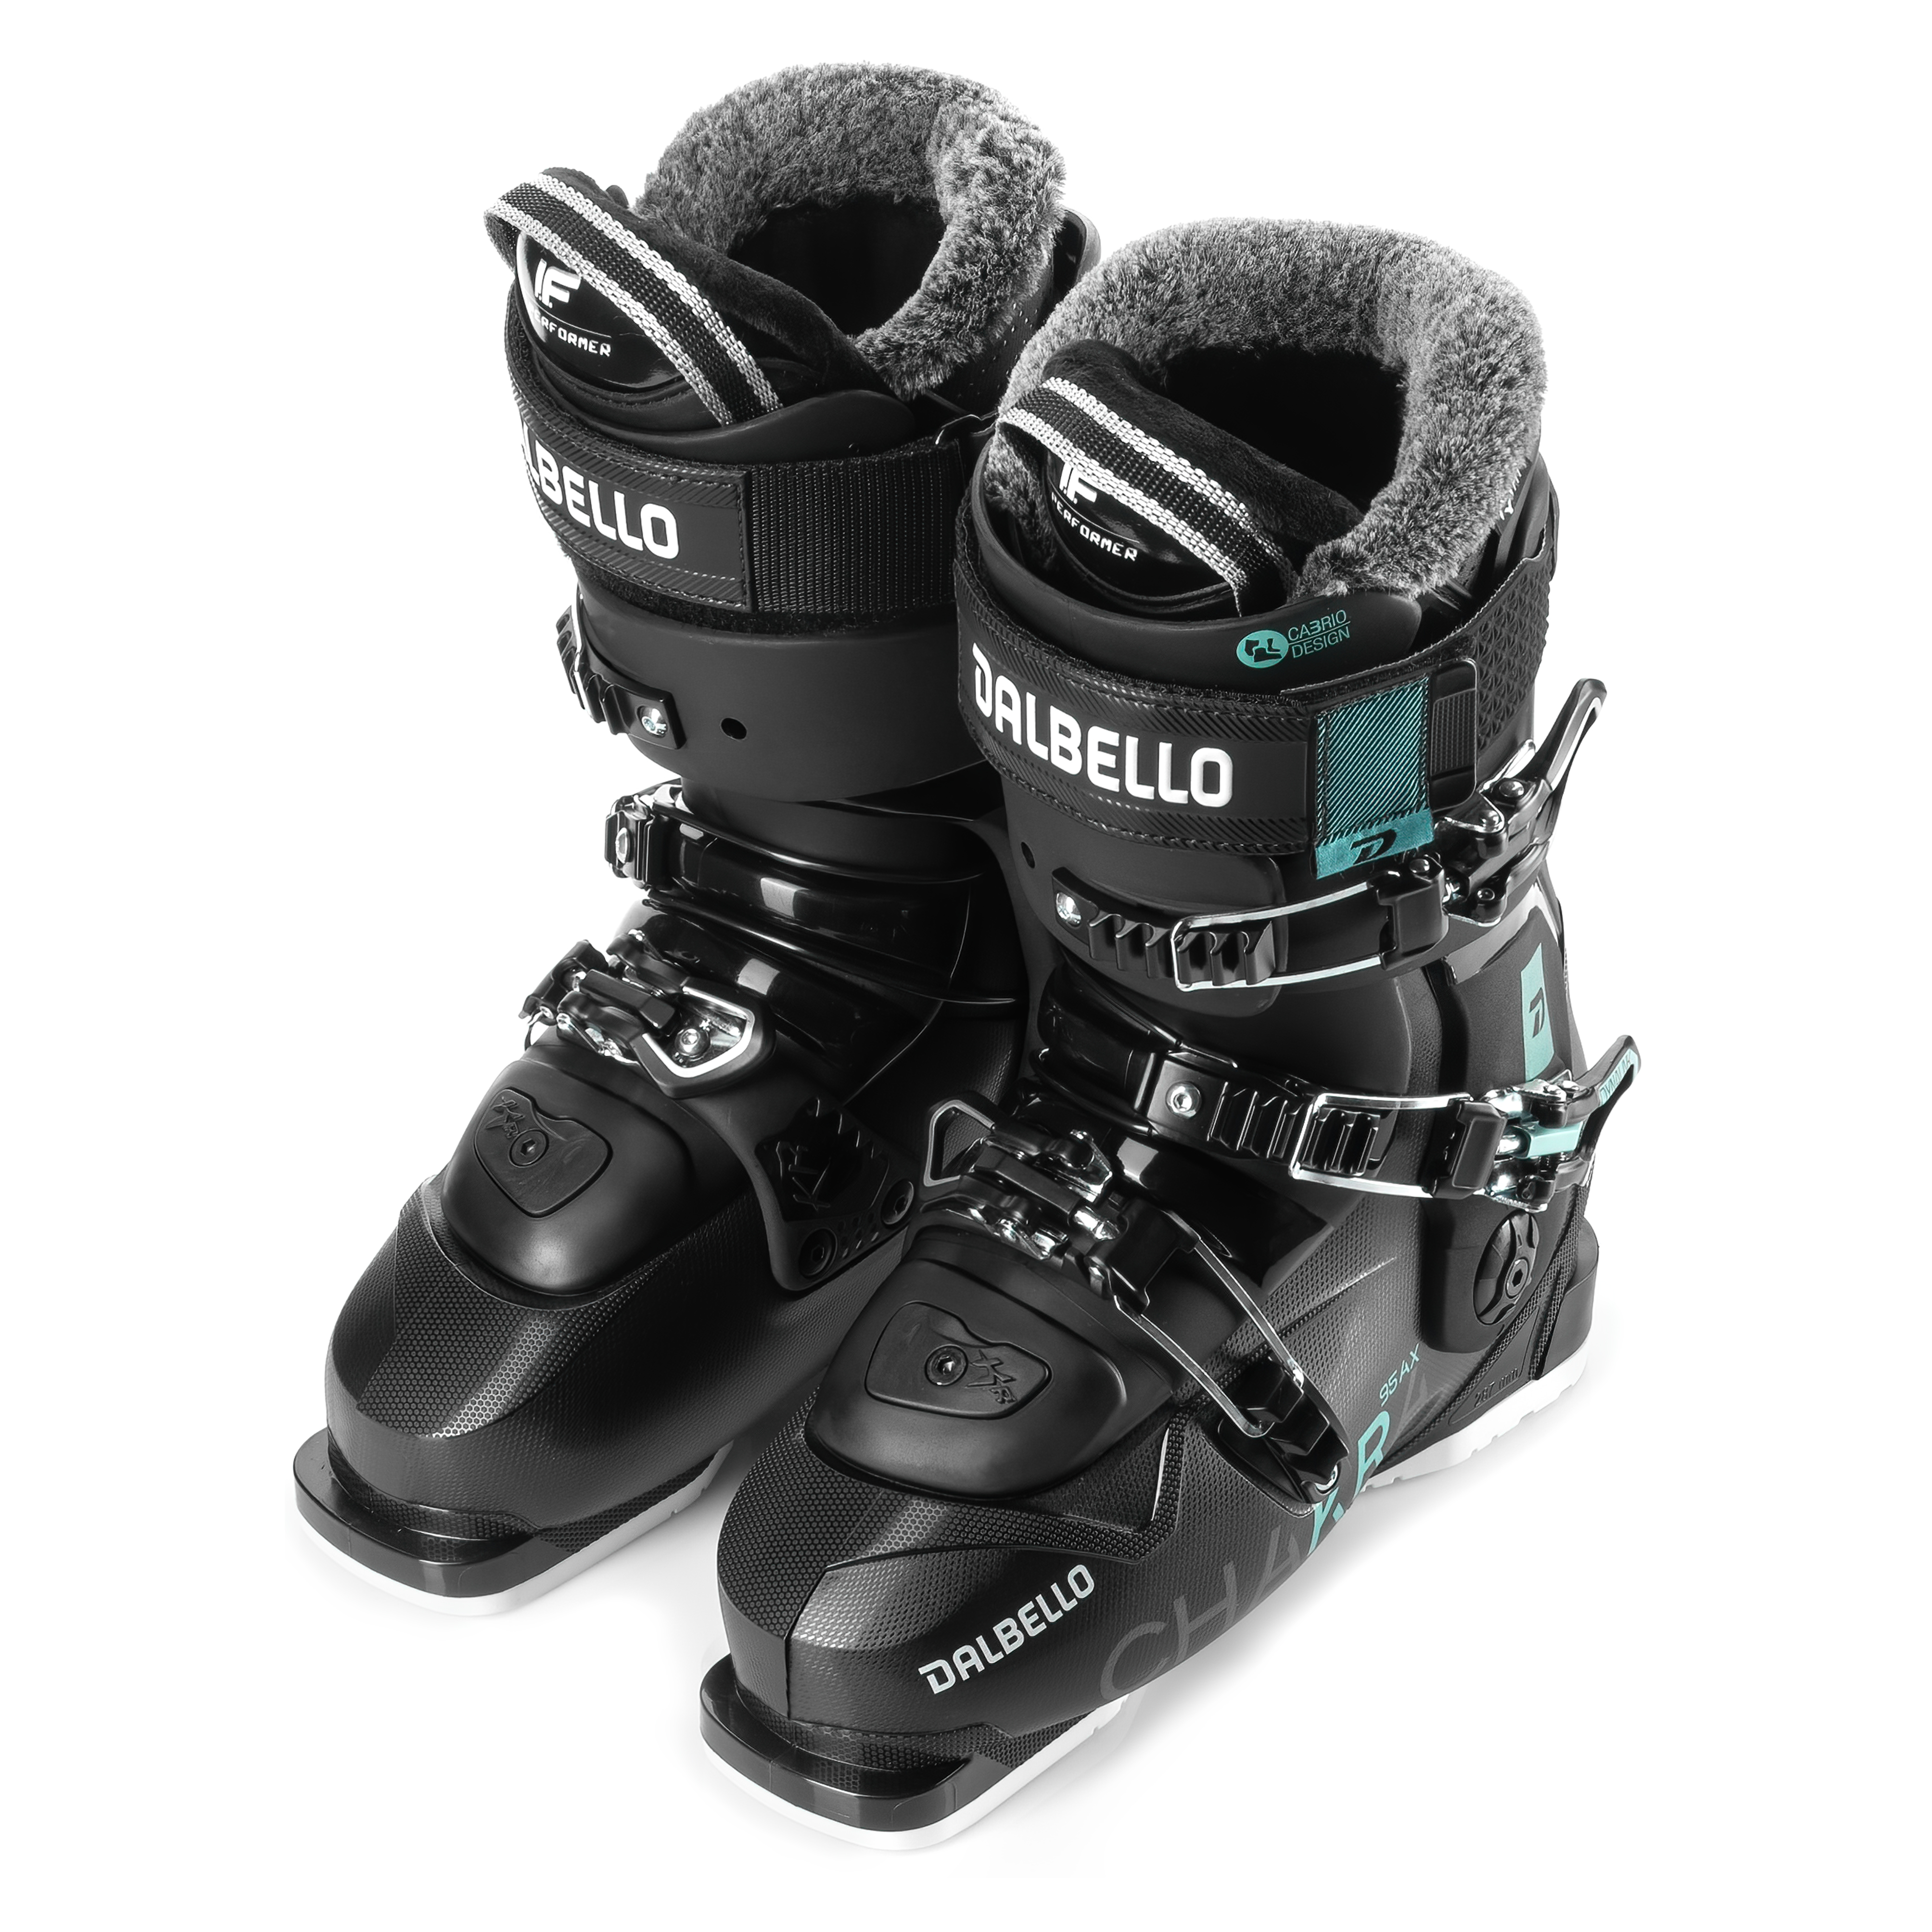 Лыжные ботинки для фрирайда Dalbello Chakra AX 95 Black (235)